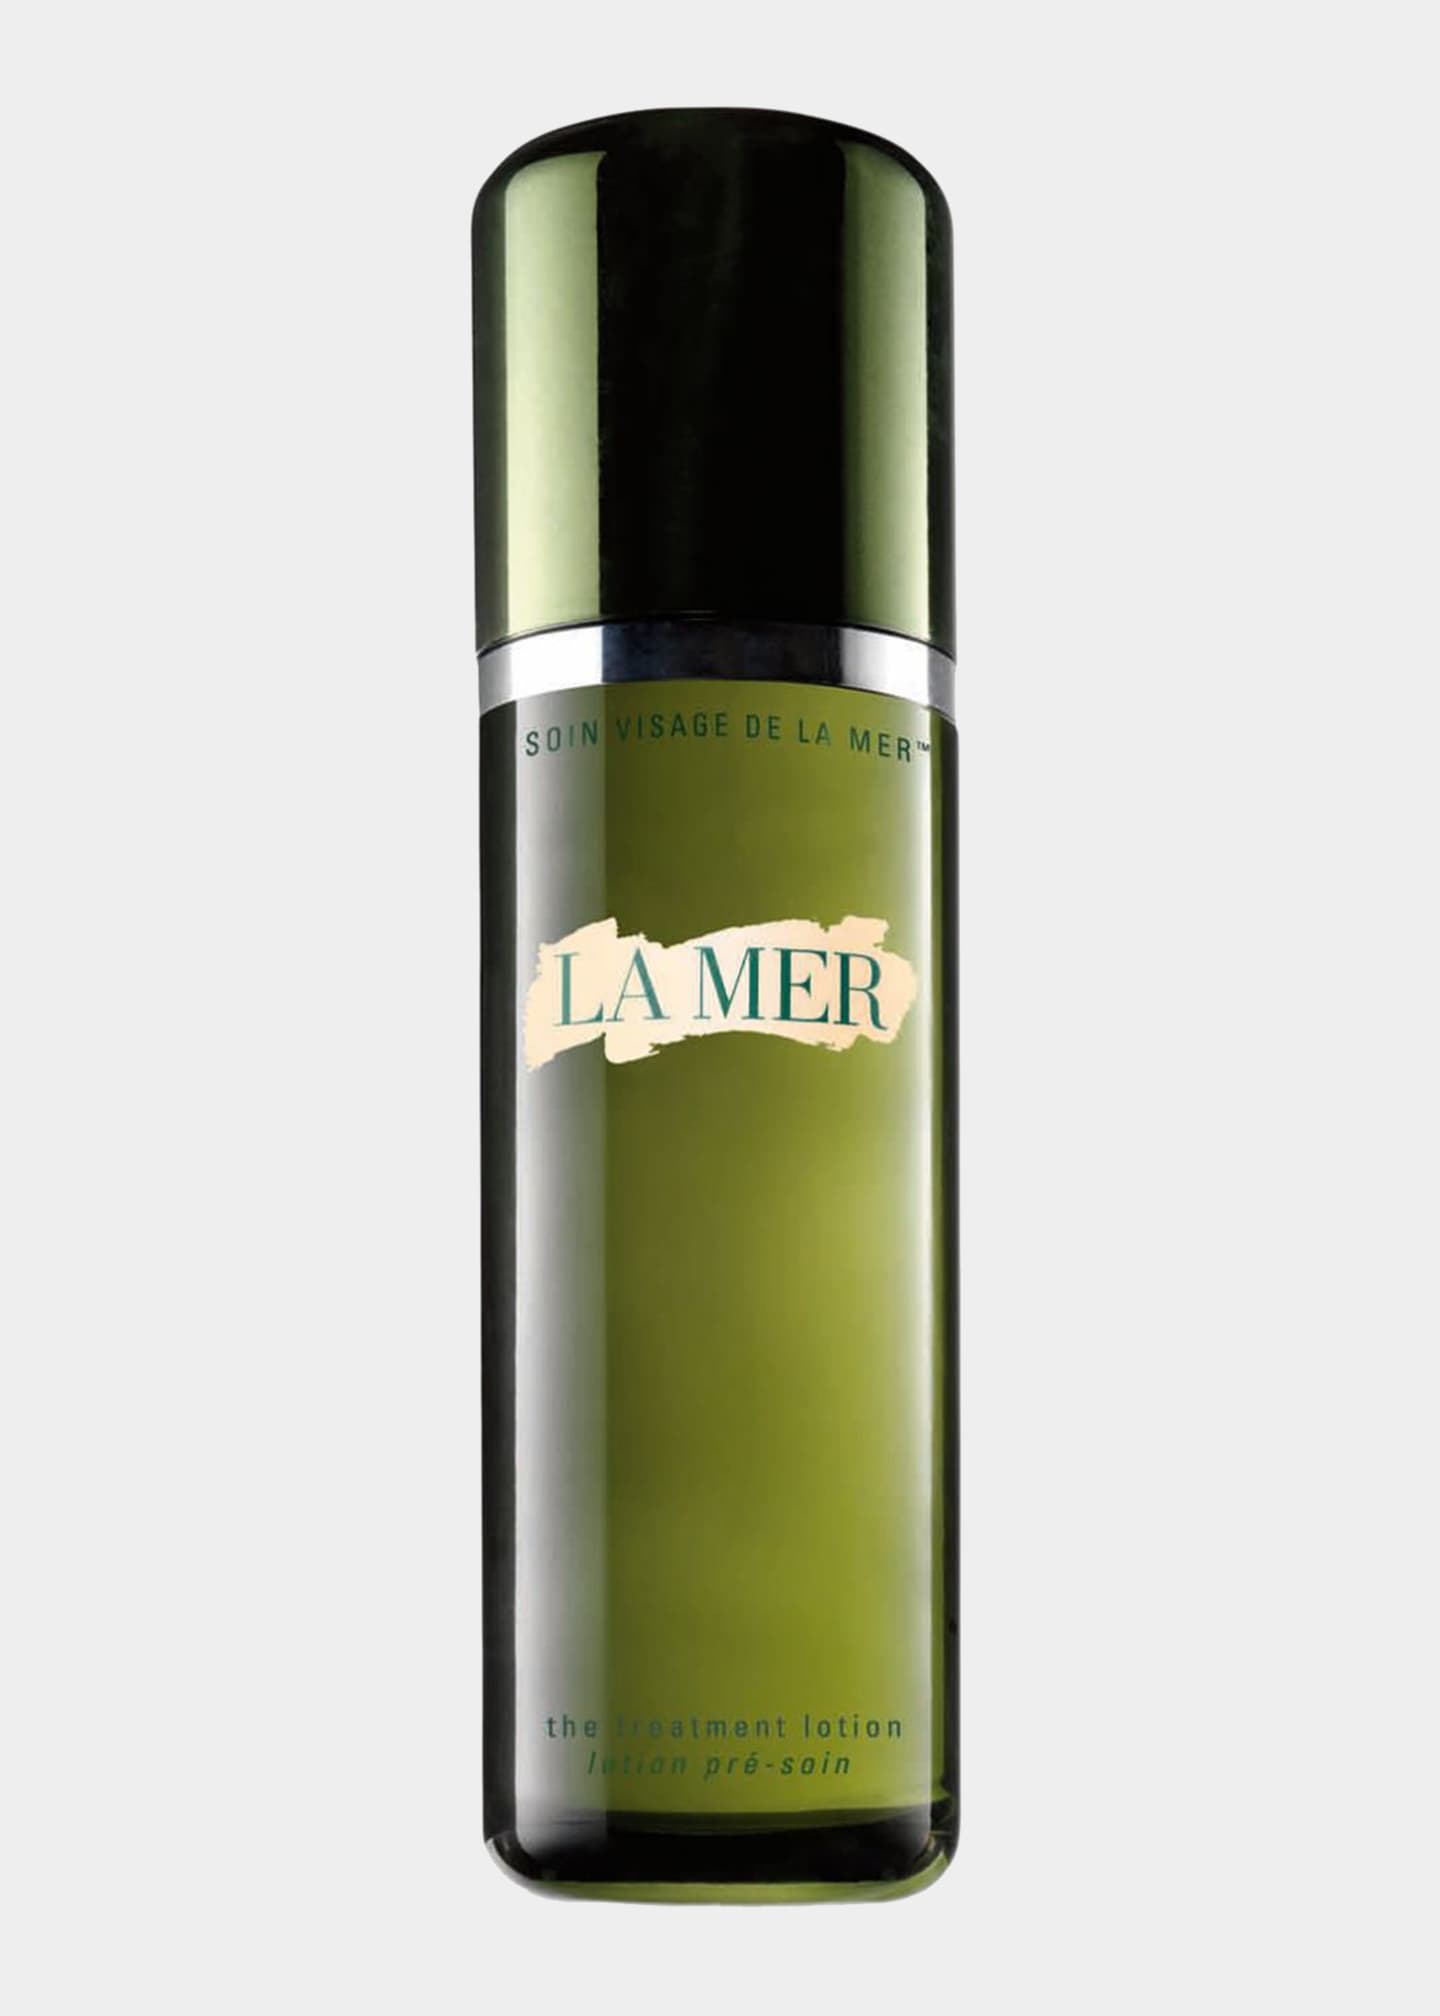 La Mer 5 oz. The Treatment Lotion Image 1 of 2